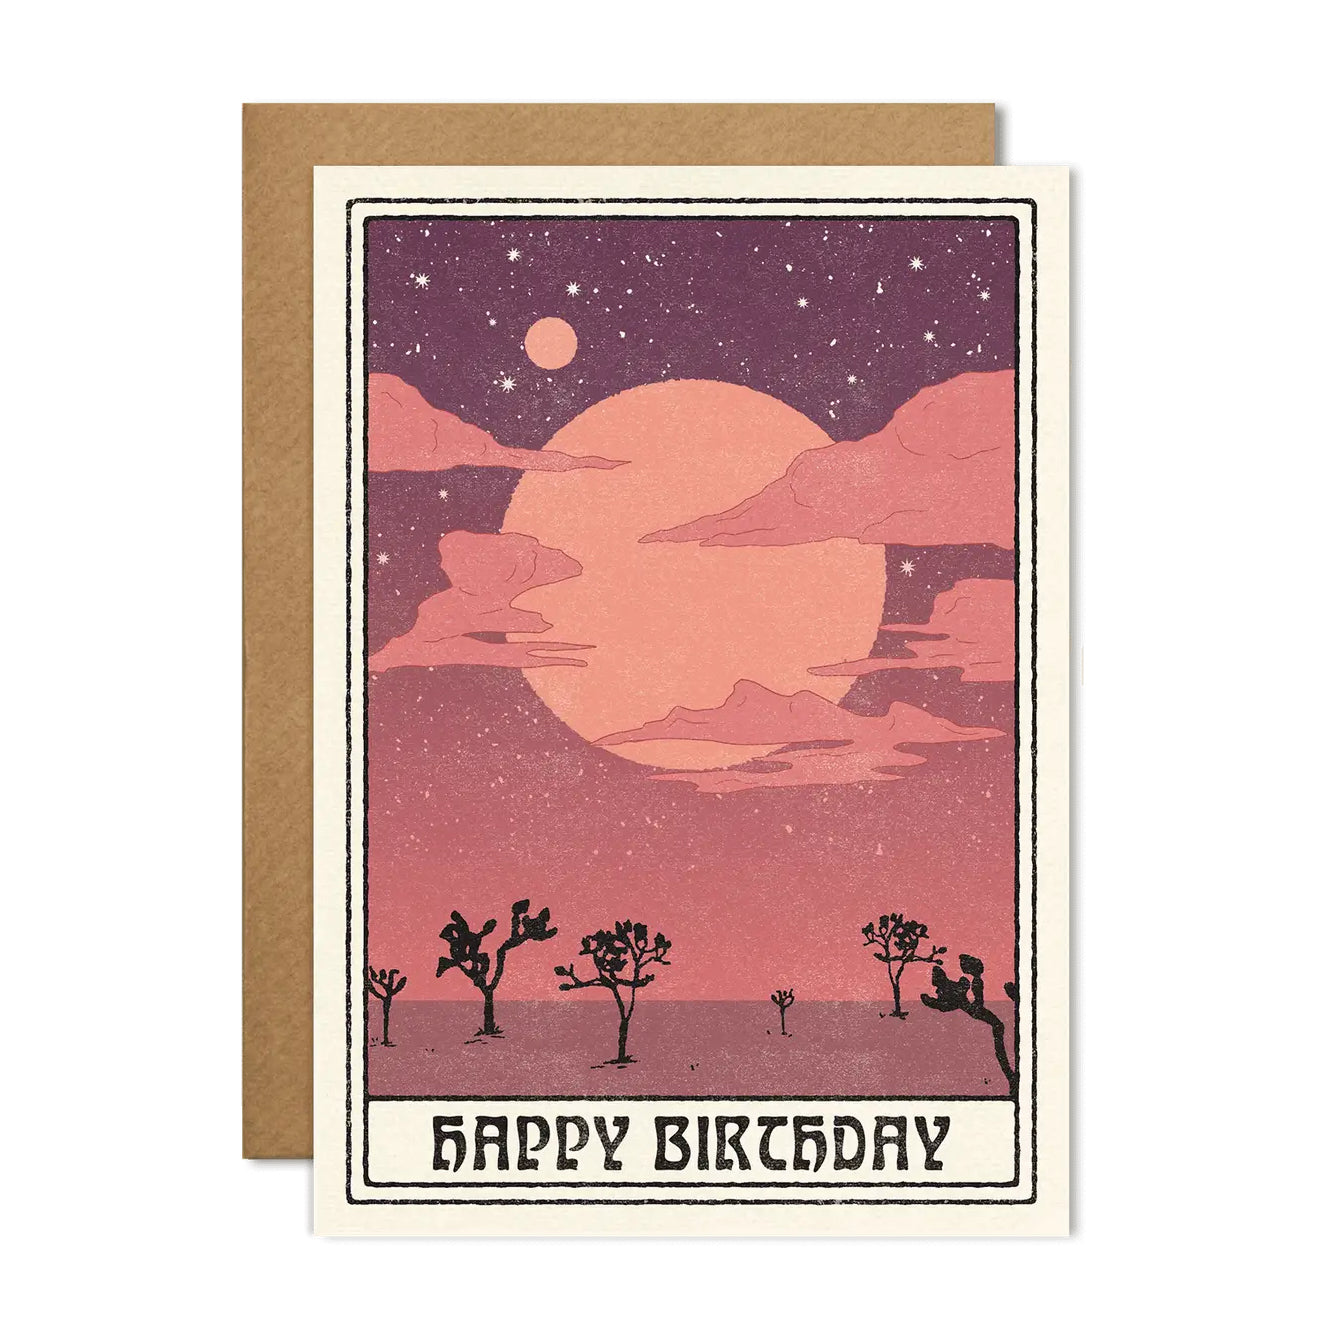 The Desert Birthday Card